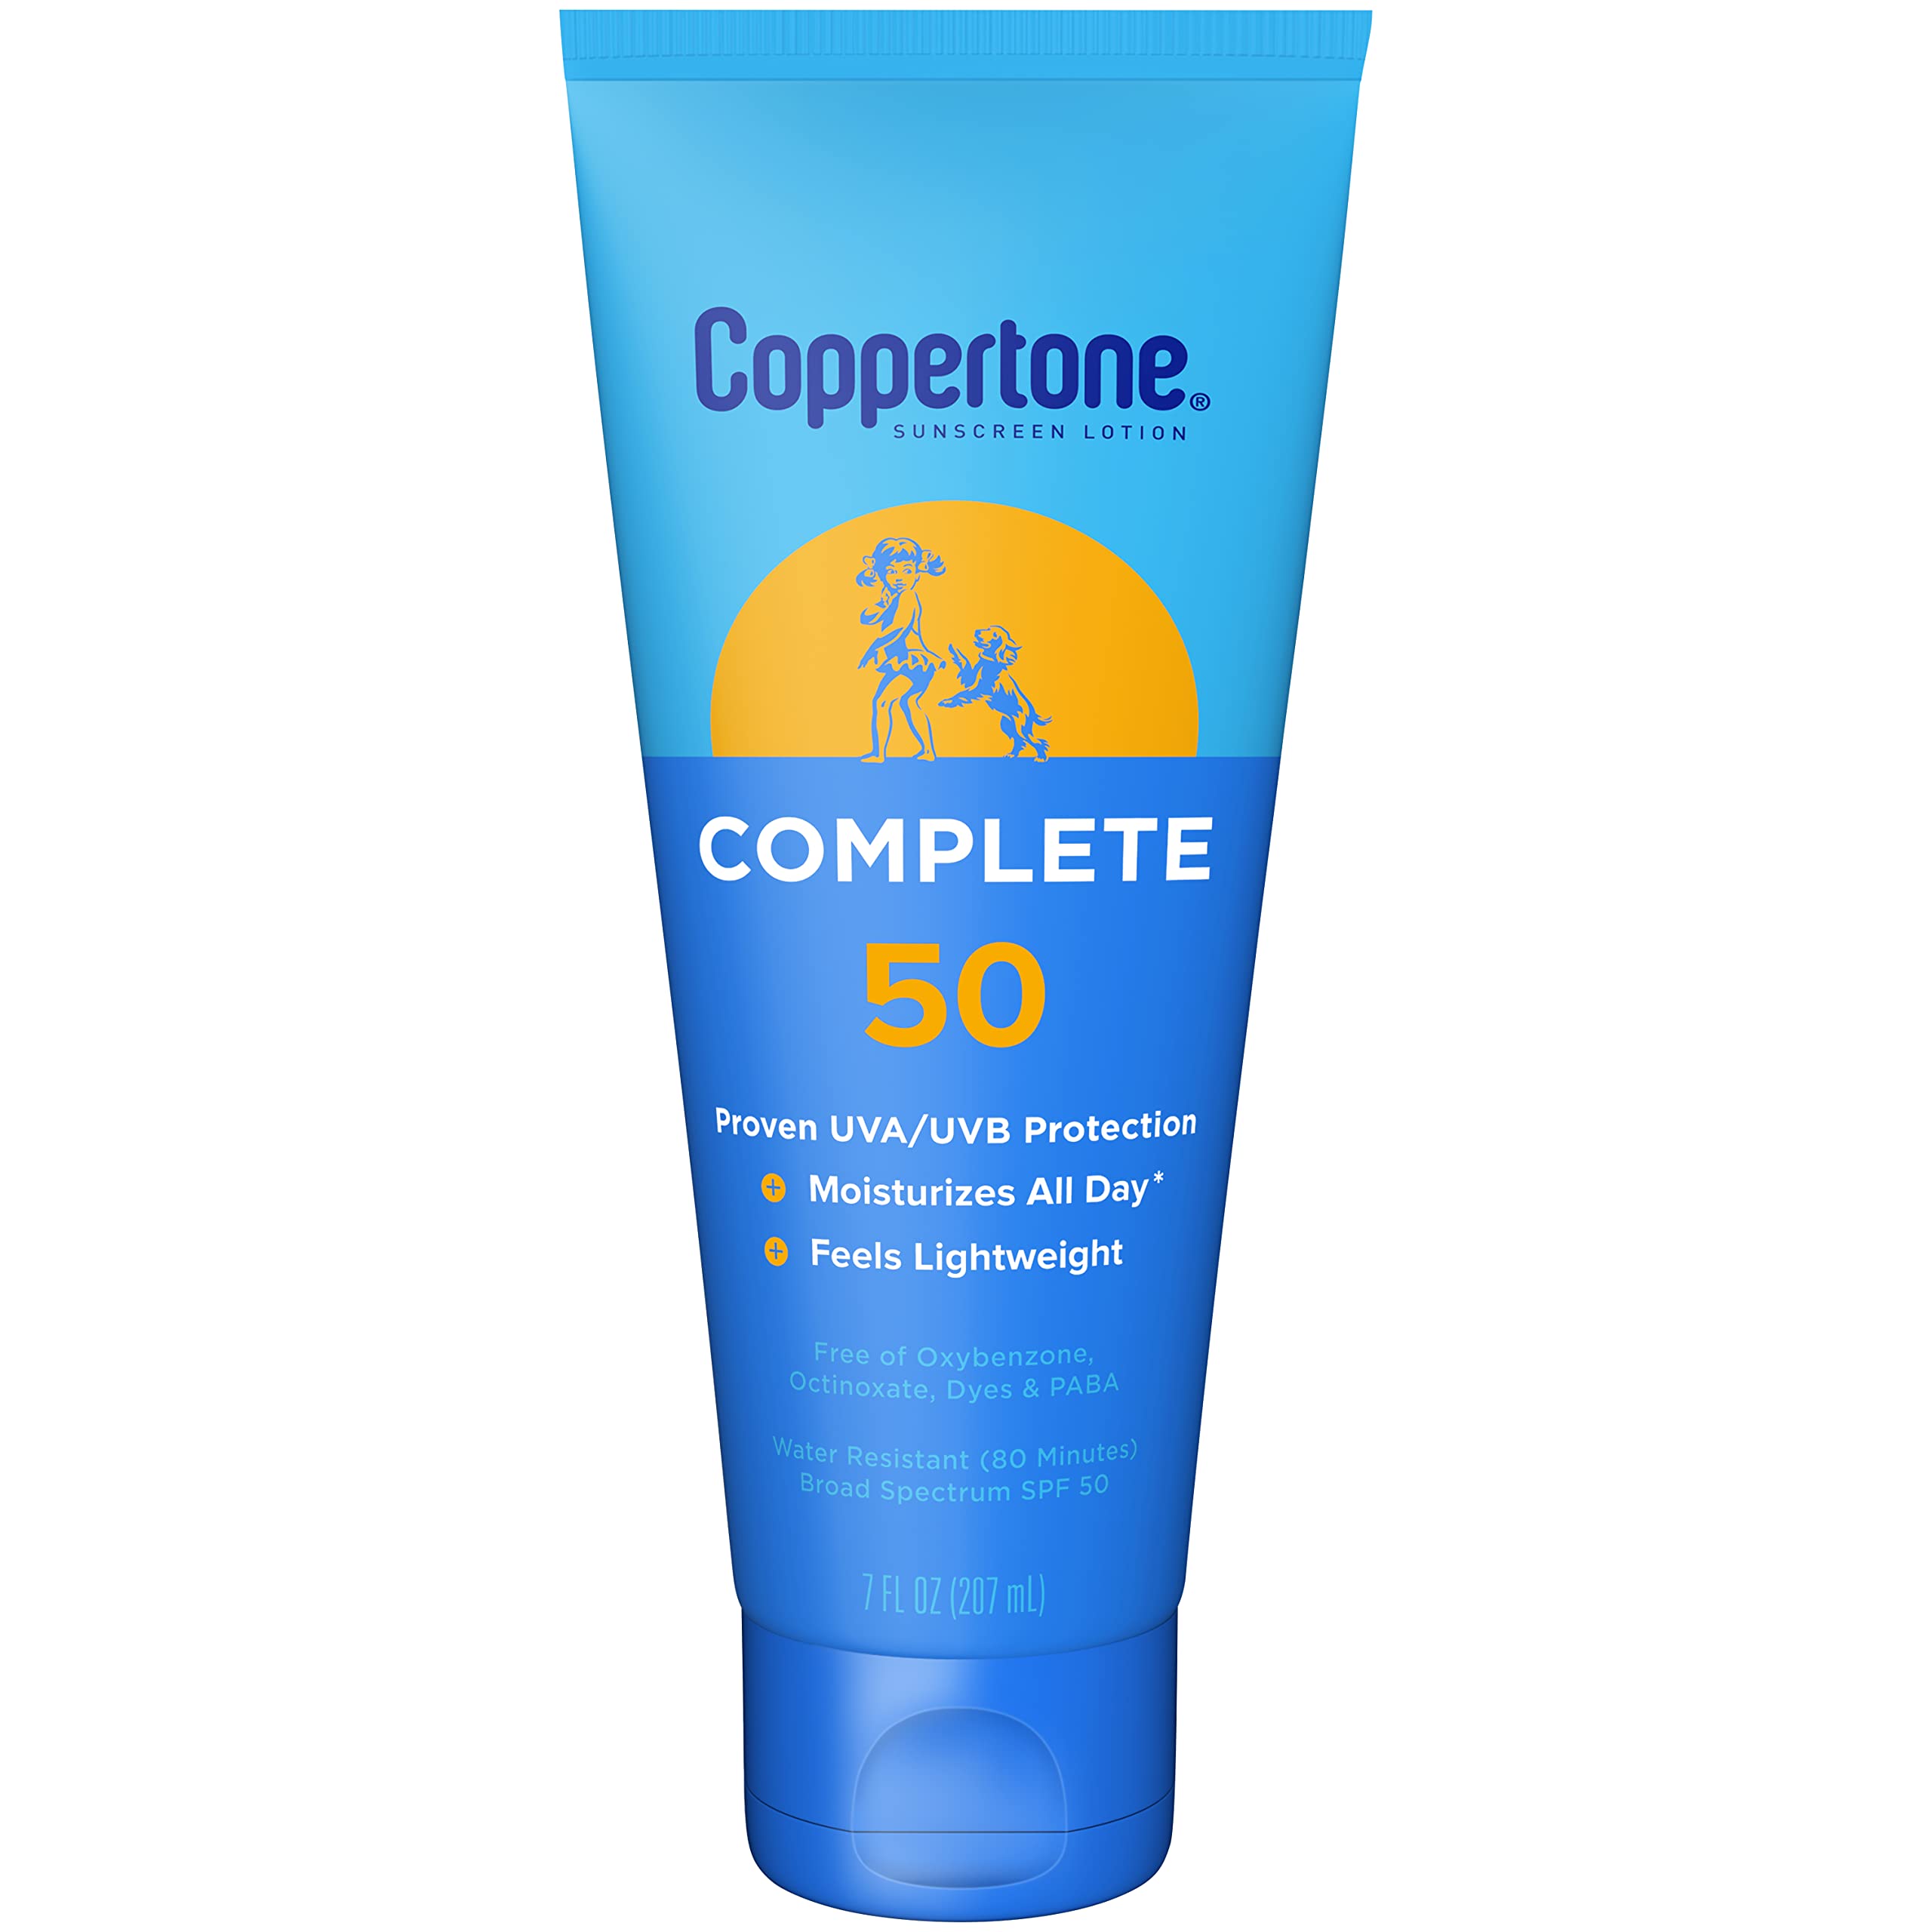 Coppertone COMPLETE SPF 50 Sunscreen Lotion, Lightweight, Moisturizing Sunscreen, Water Resistant Body Sunscreen SPF 50, 7 Fl Oz Tube